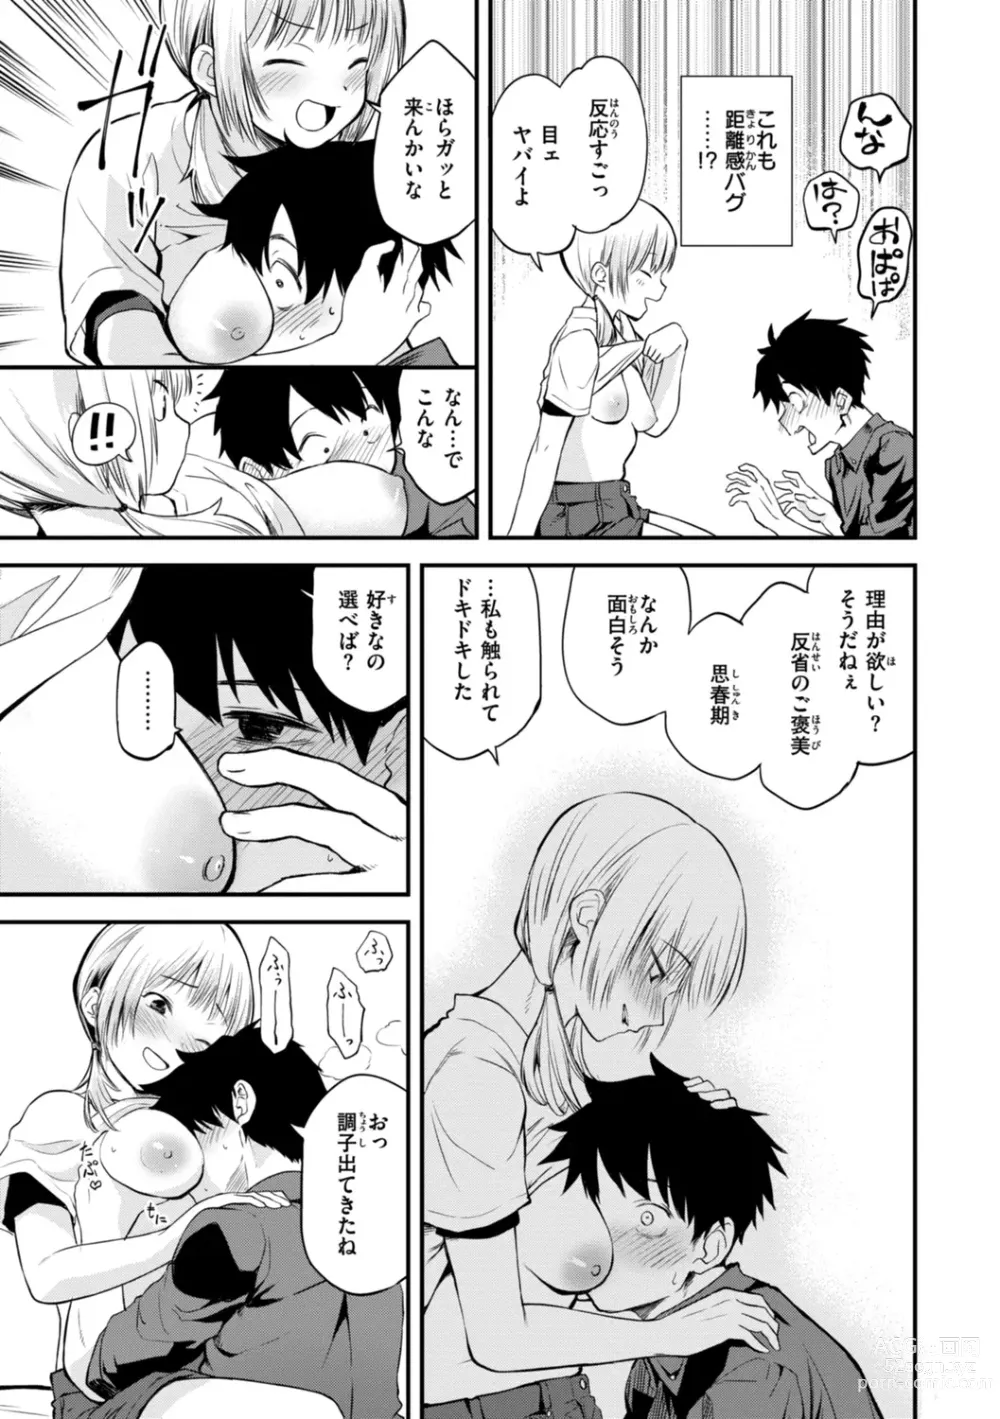 Page 11 of manga Jaa, Ecchi Shichau? - Shall we have H then?